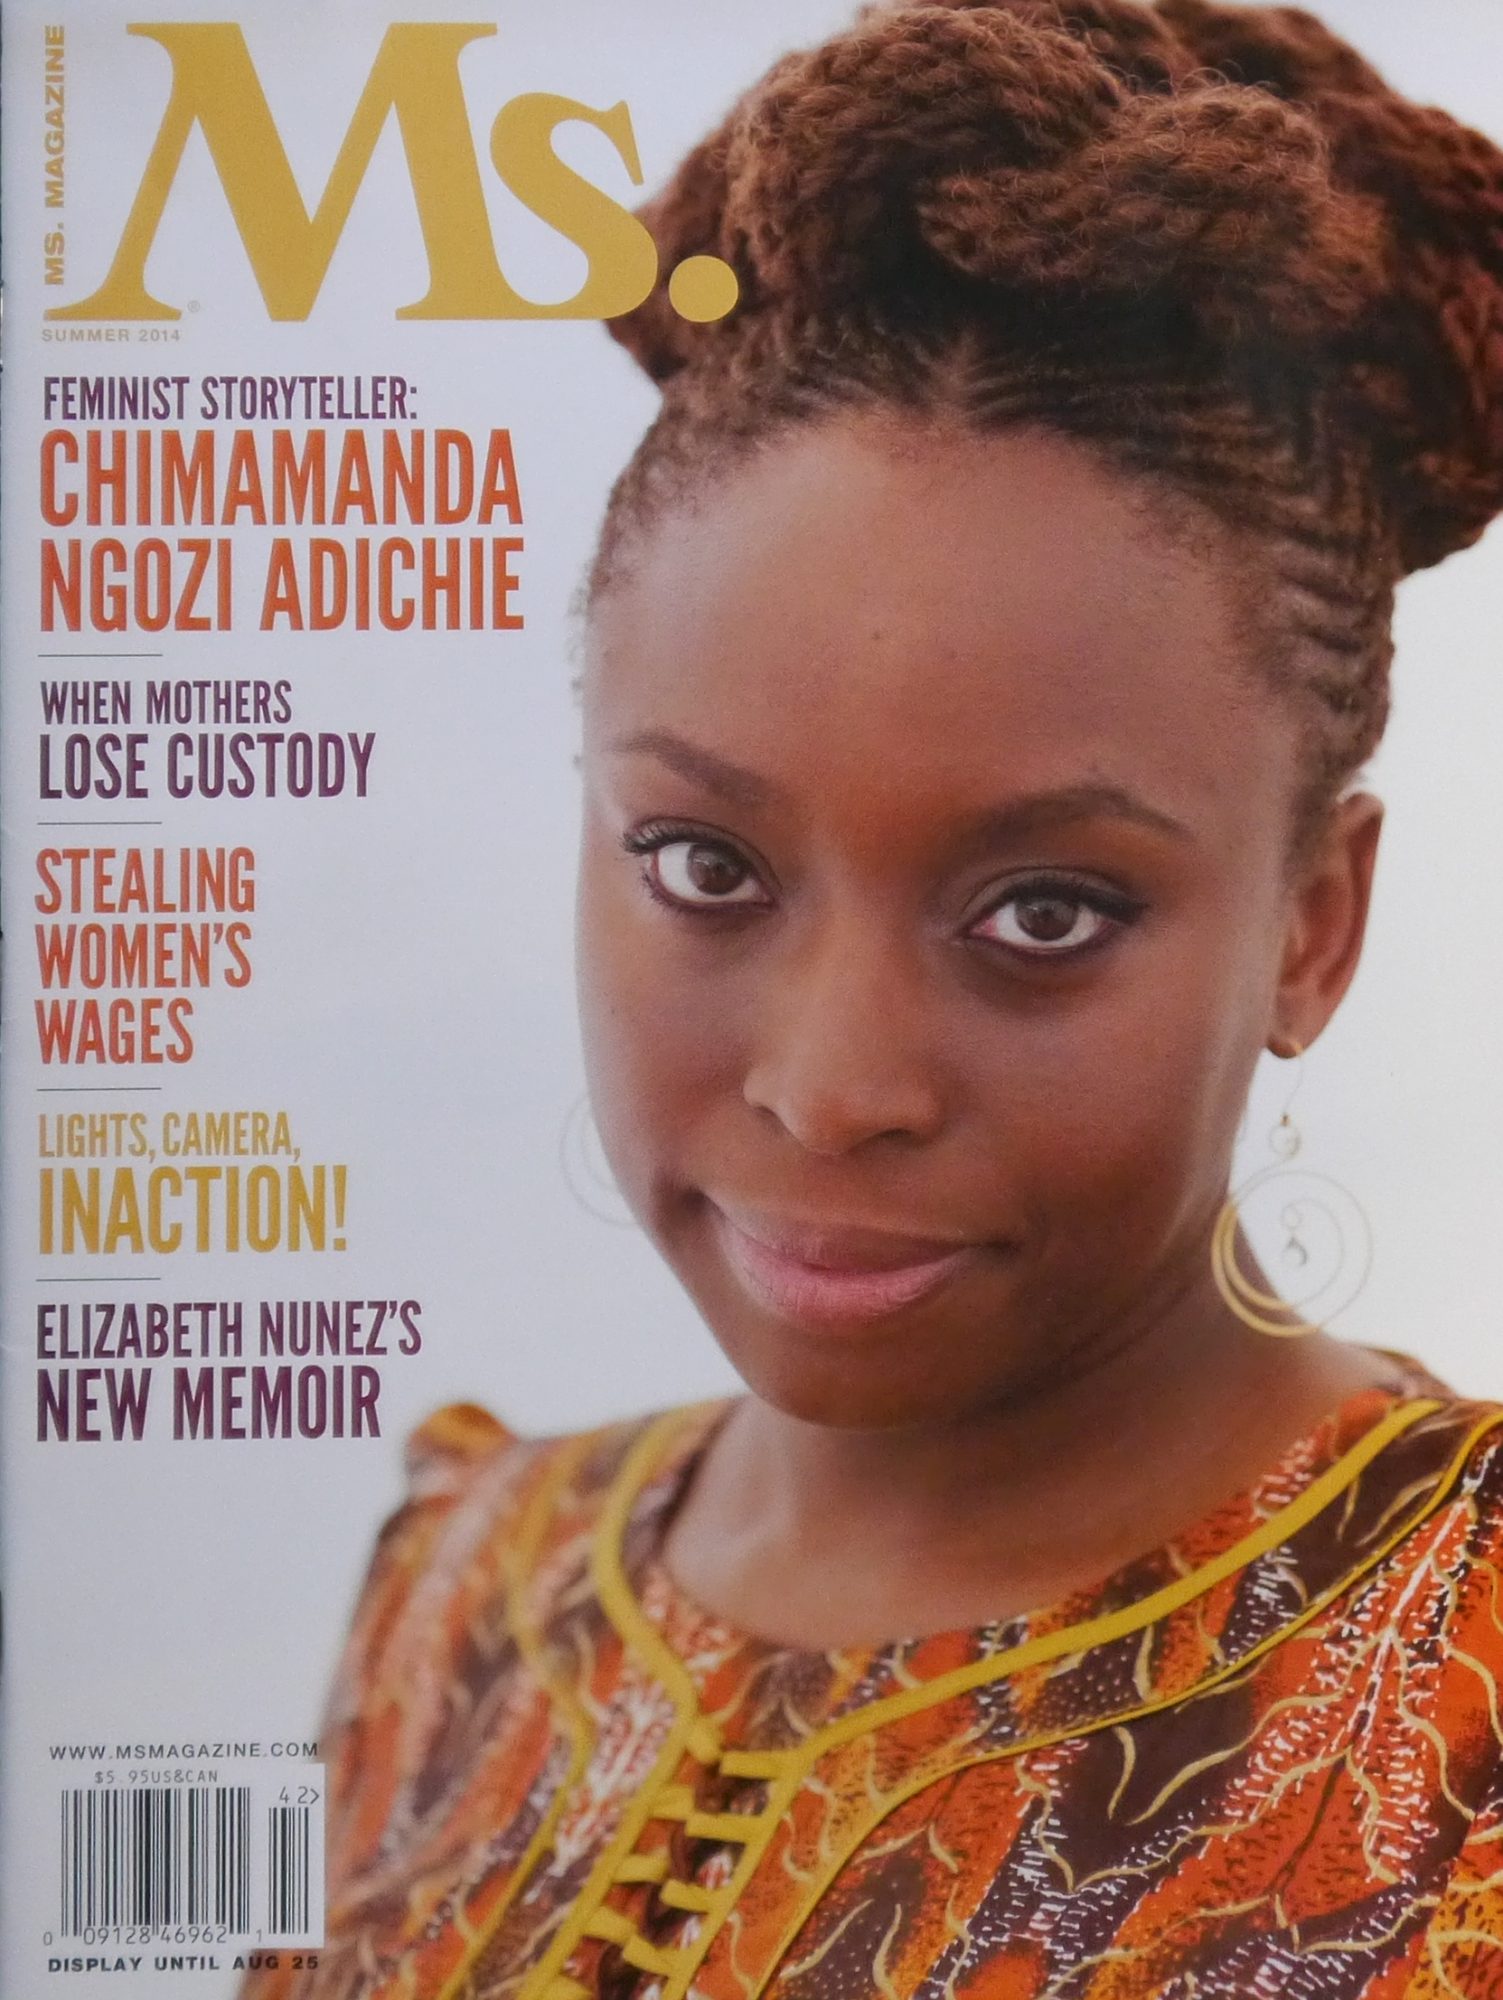 El feminisme explicat per Chimamanda Adichie